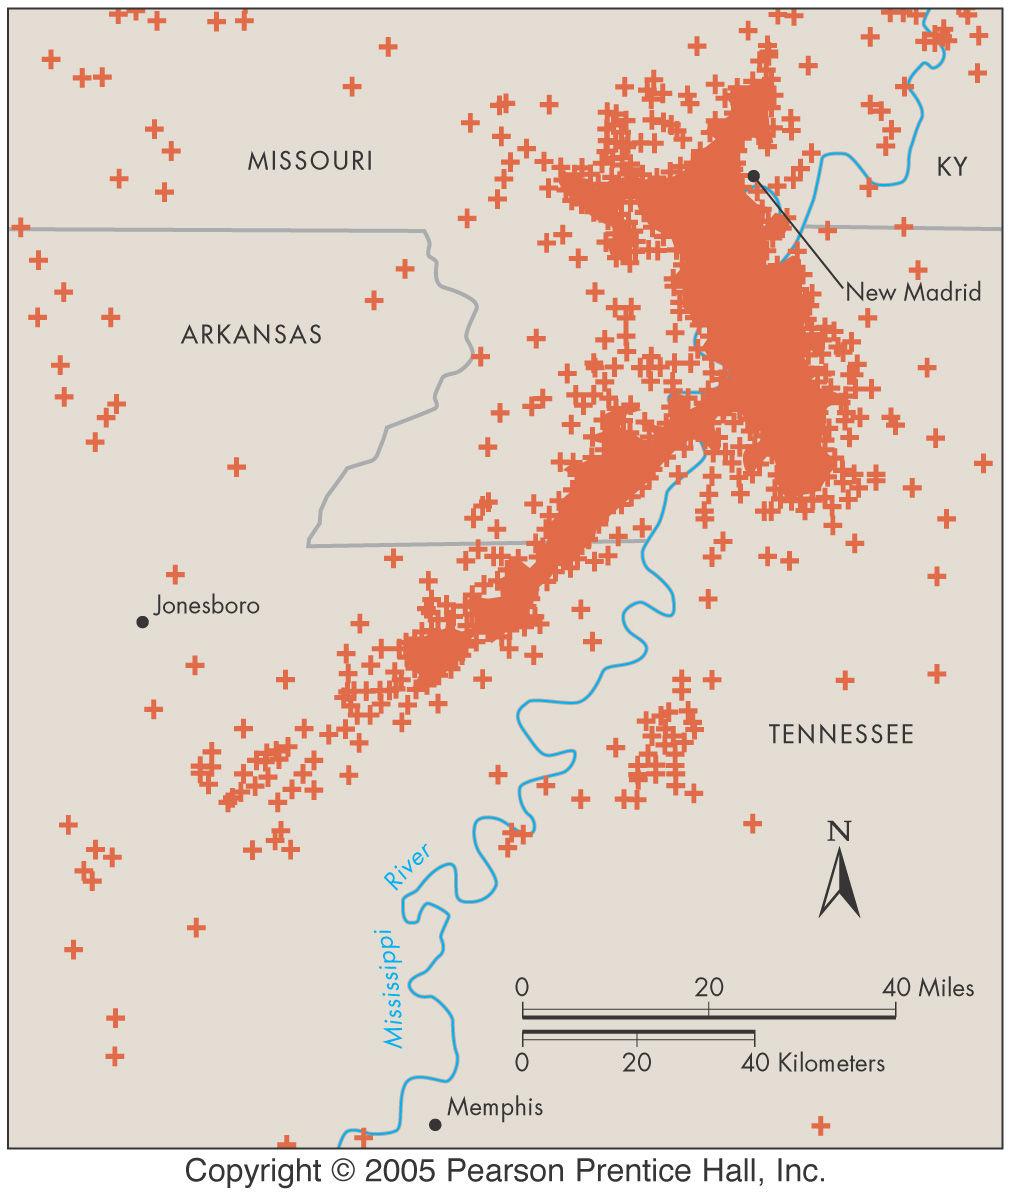 Fracture Zone: I. Locations of Earthquakes Charleston, South Carolina, 1886 5 7 I.